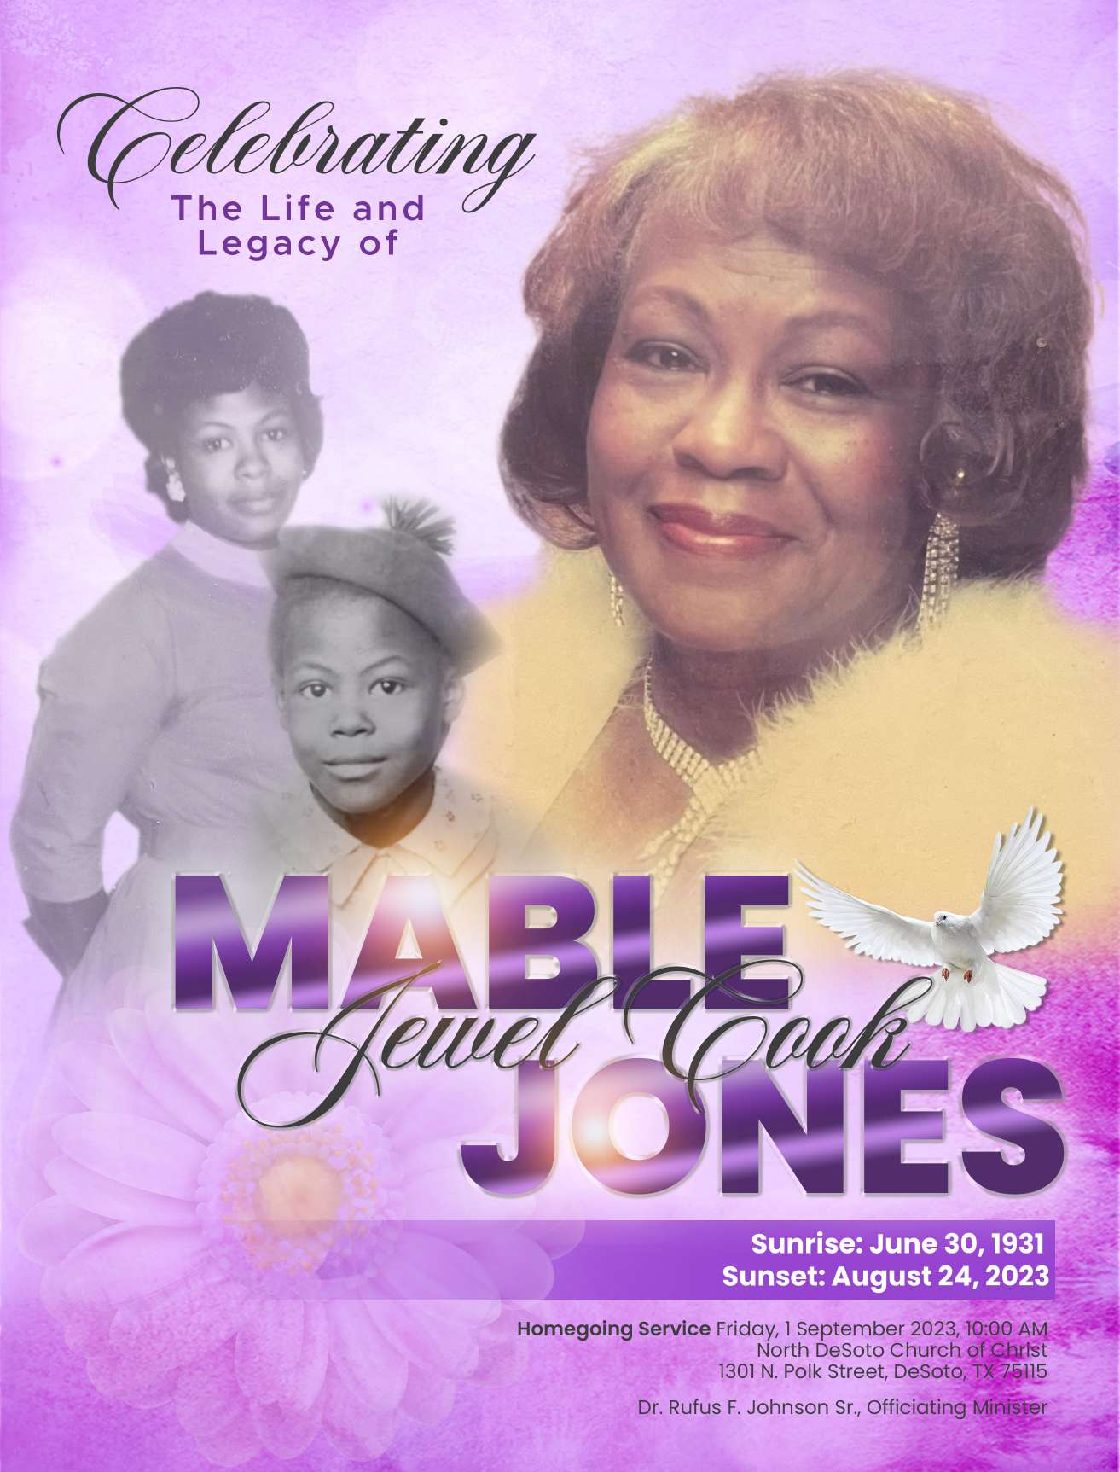 Mable Jewel Cook Jones 1931 – 2023